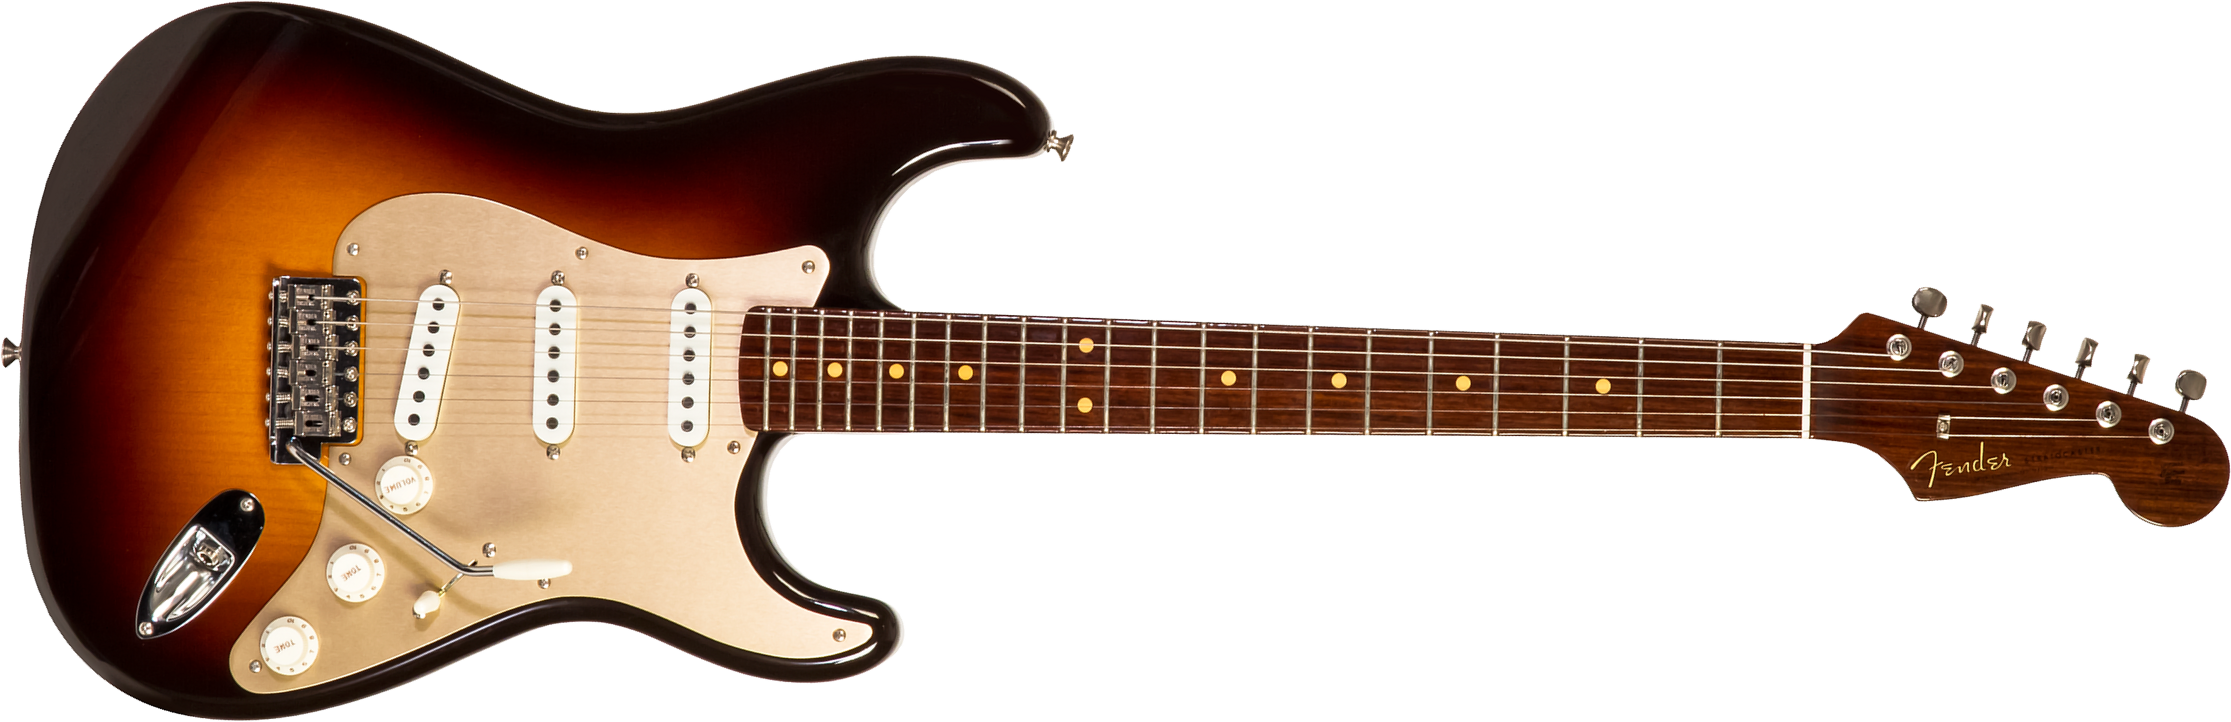 Fender Custom Shop Strat 1957 3s Trem Rw #cz548509 - Closet Classic 2-color Sunburst - E-Gitarre in Teleform - Main picture